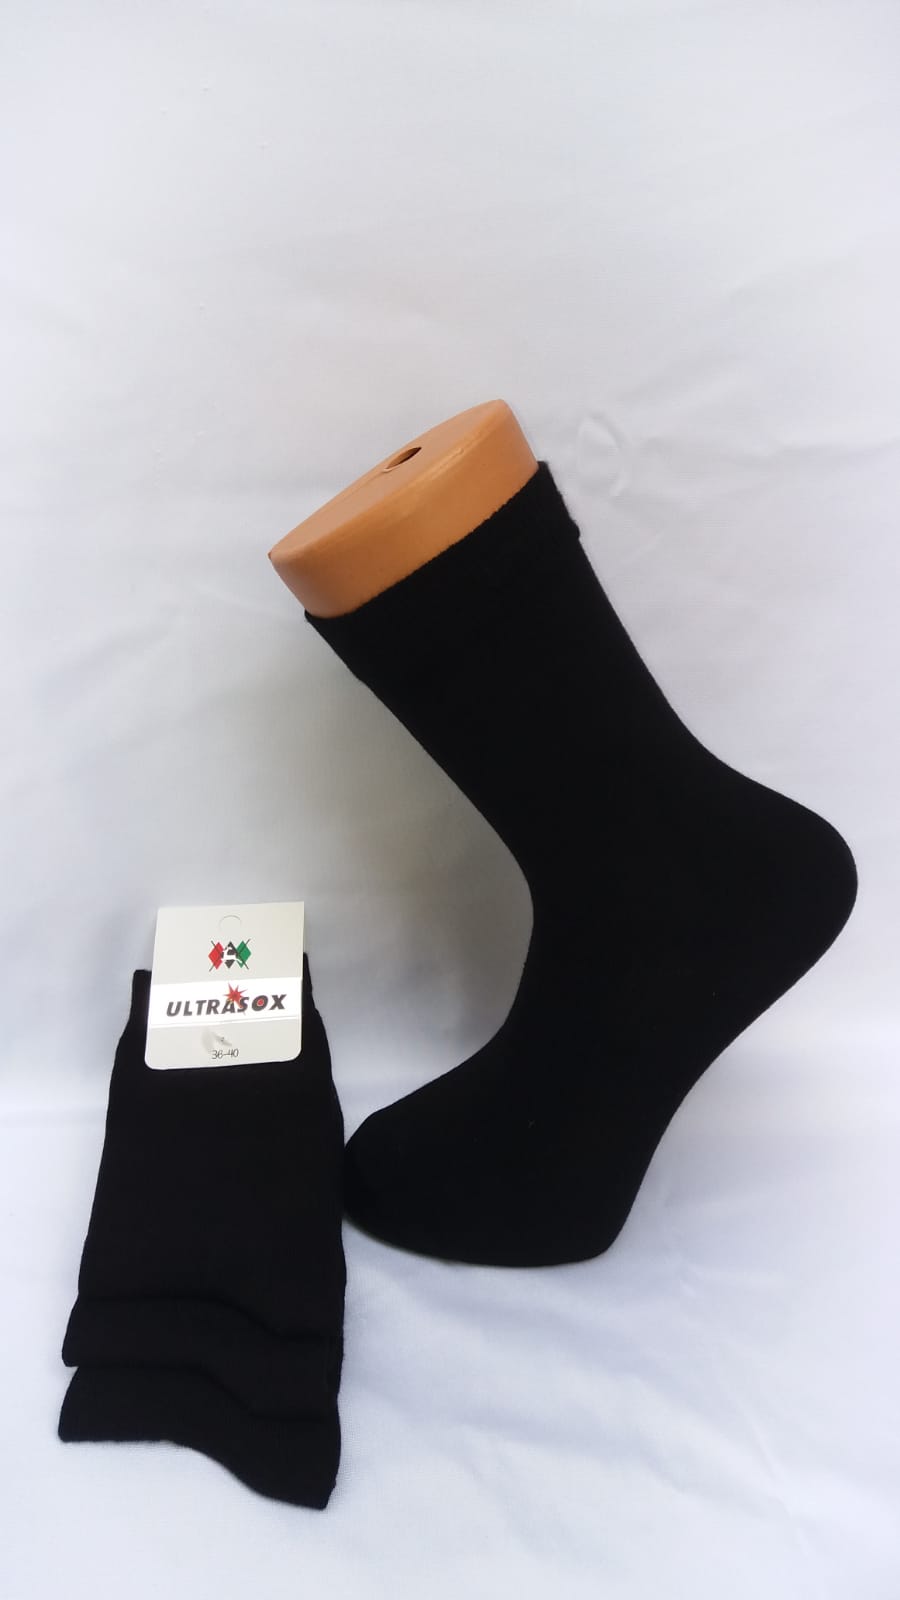 Ultrasox dunne sokken